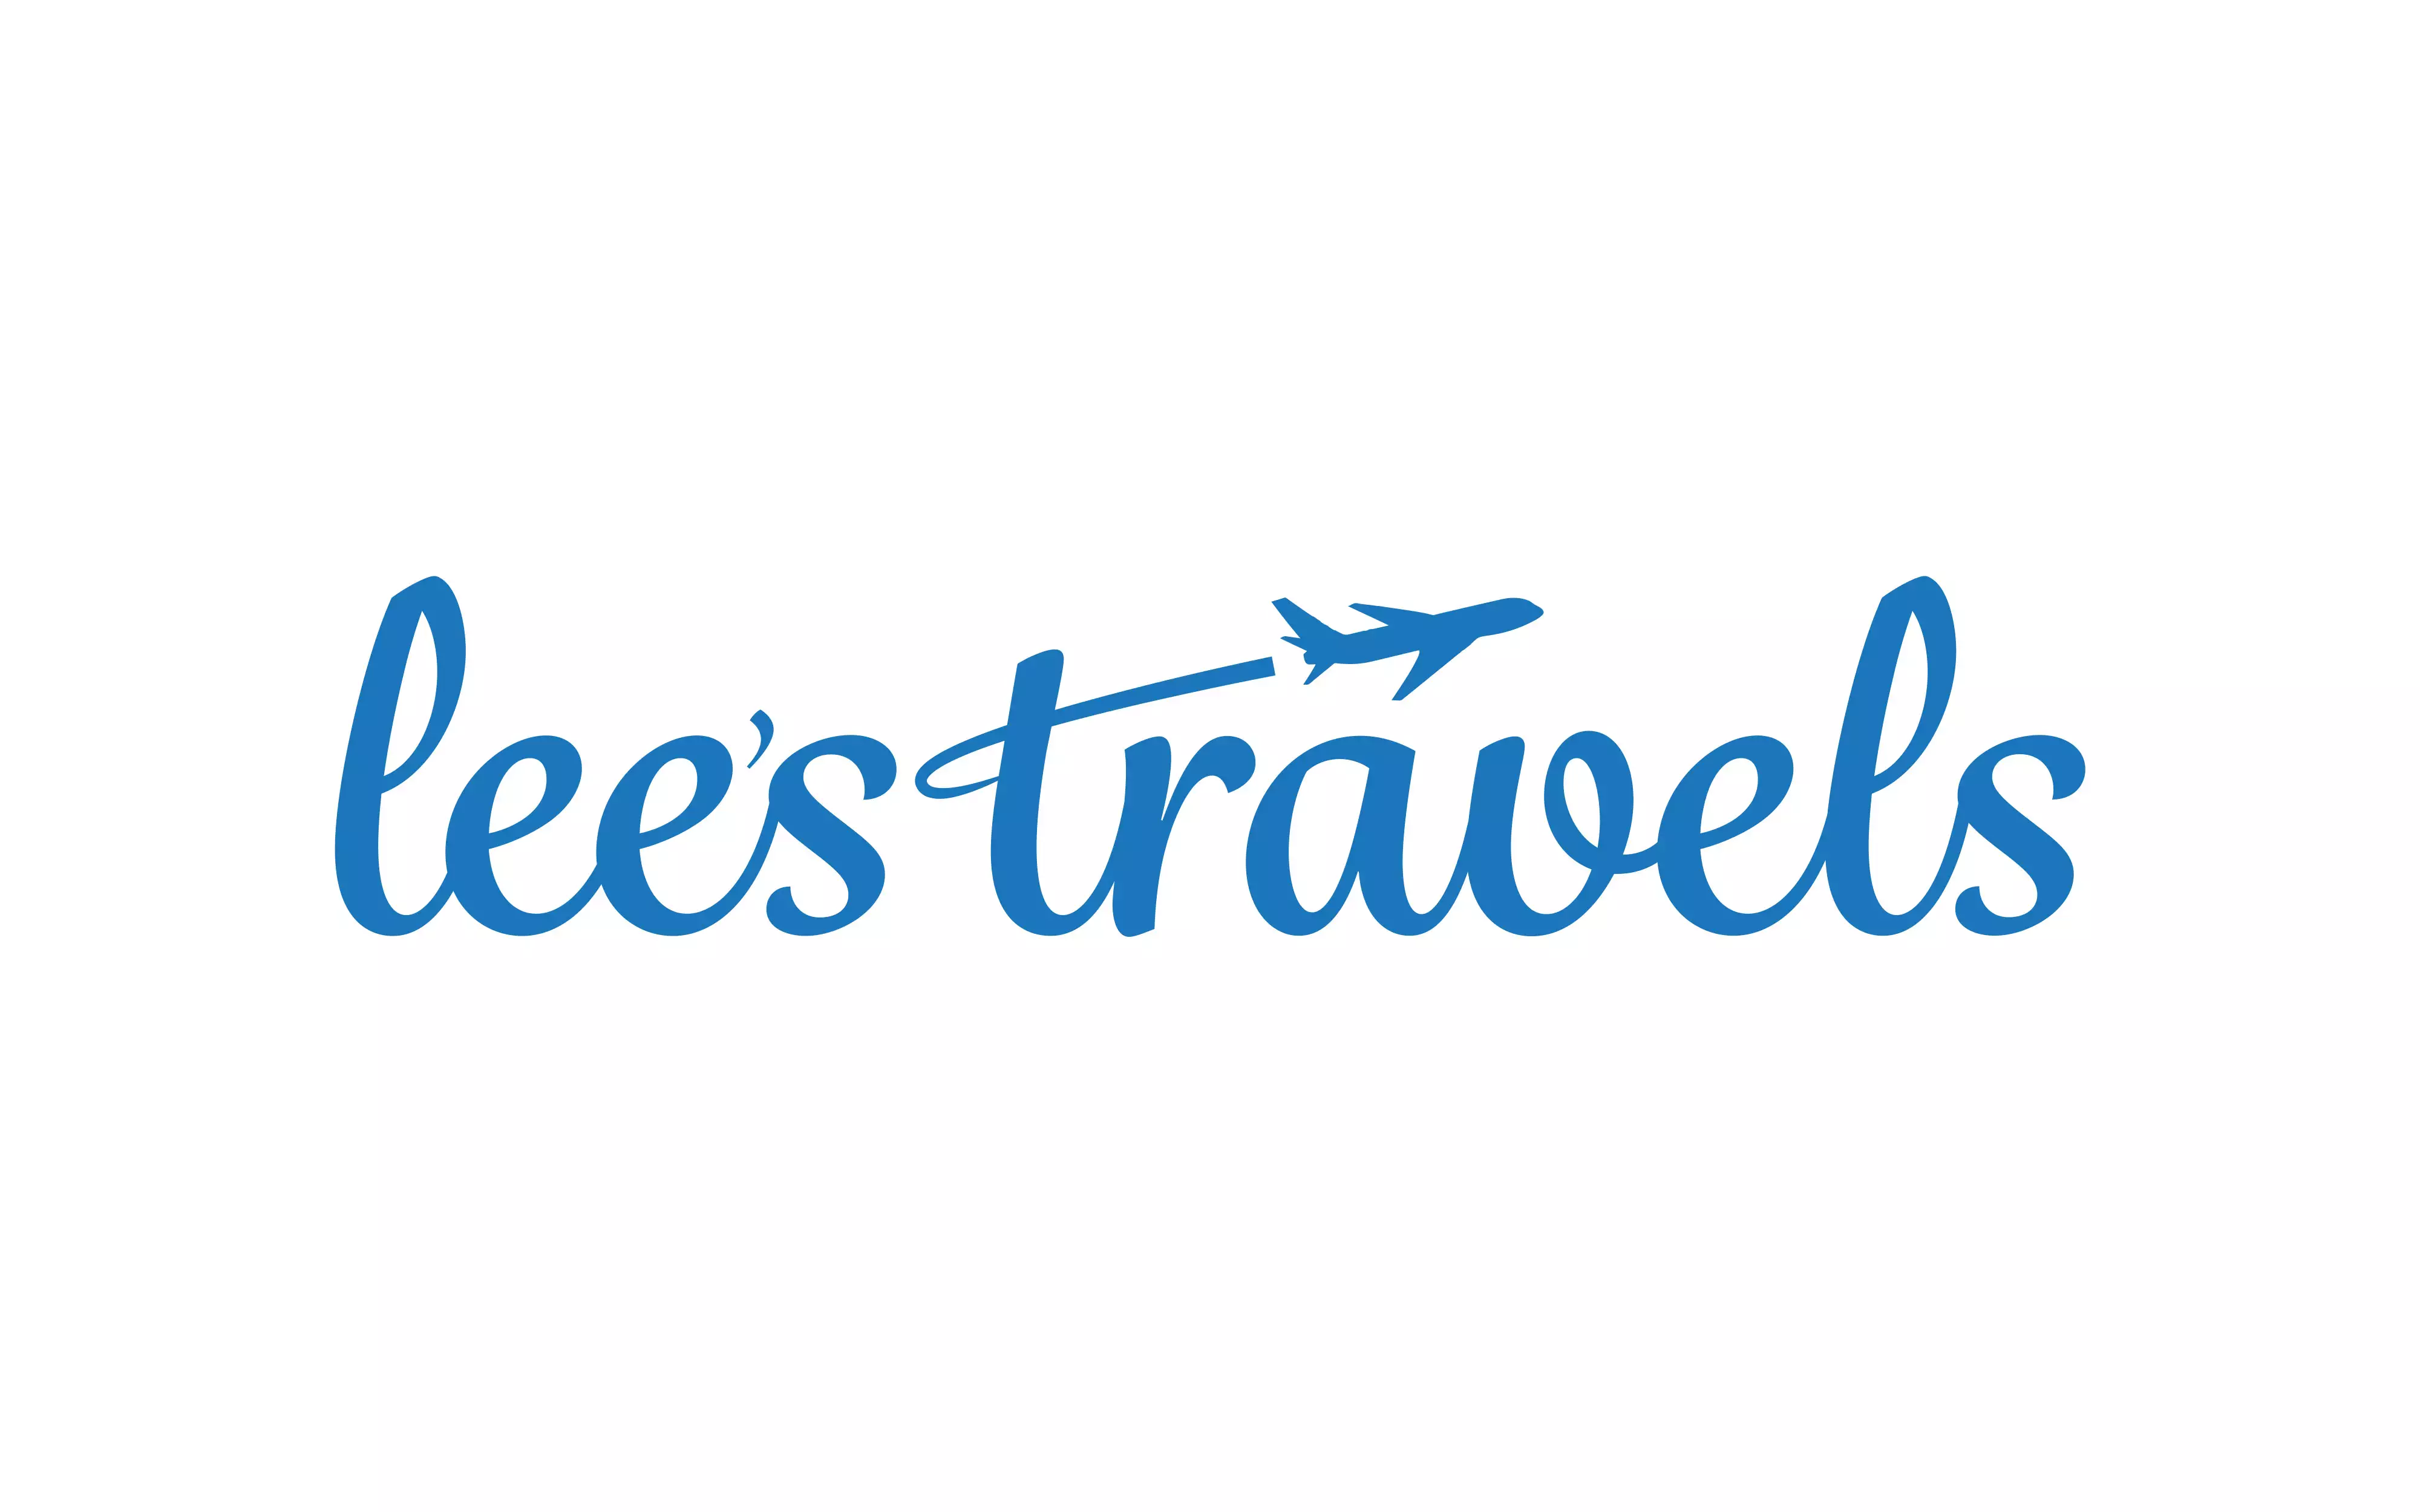 Logo Design for Lee's Travels in Durham